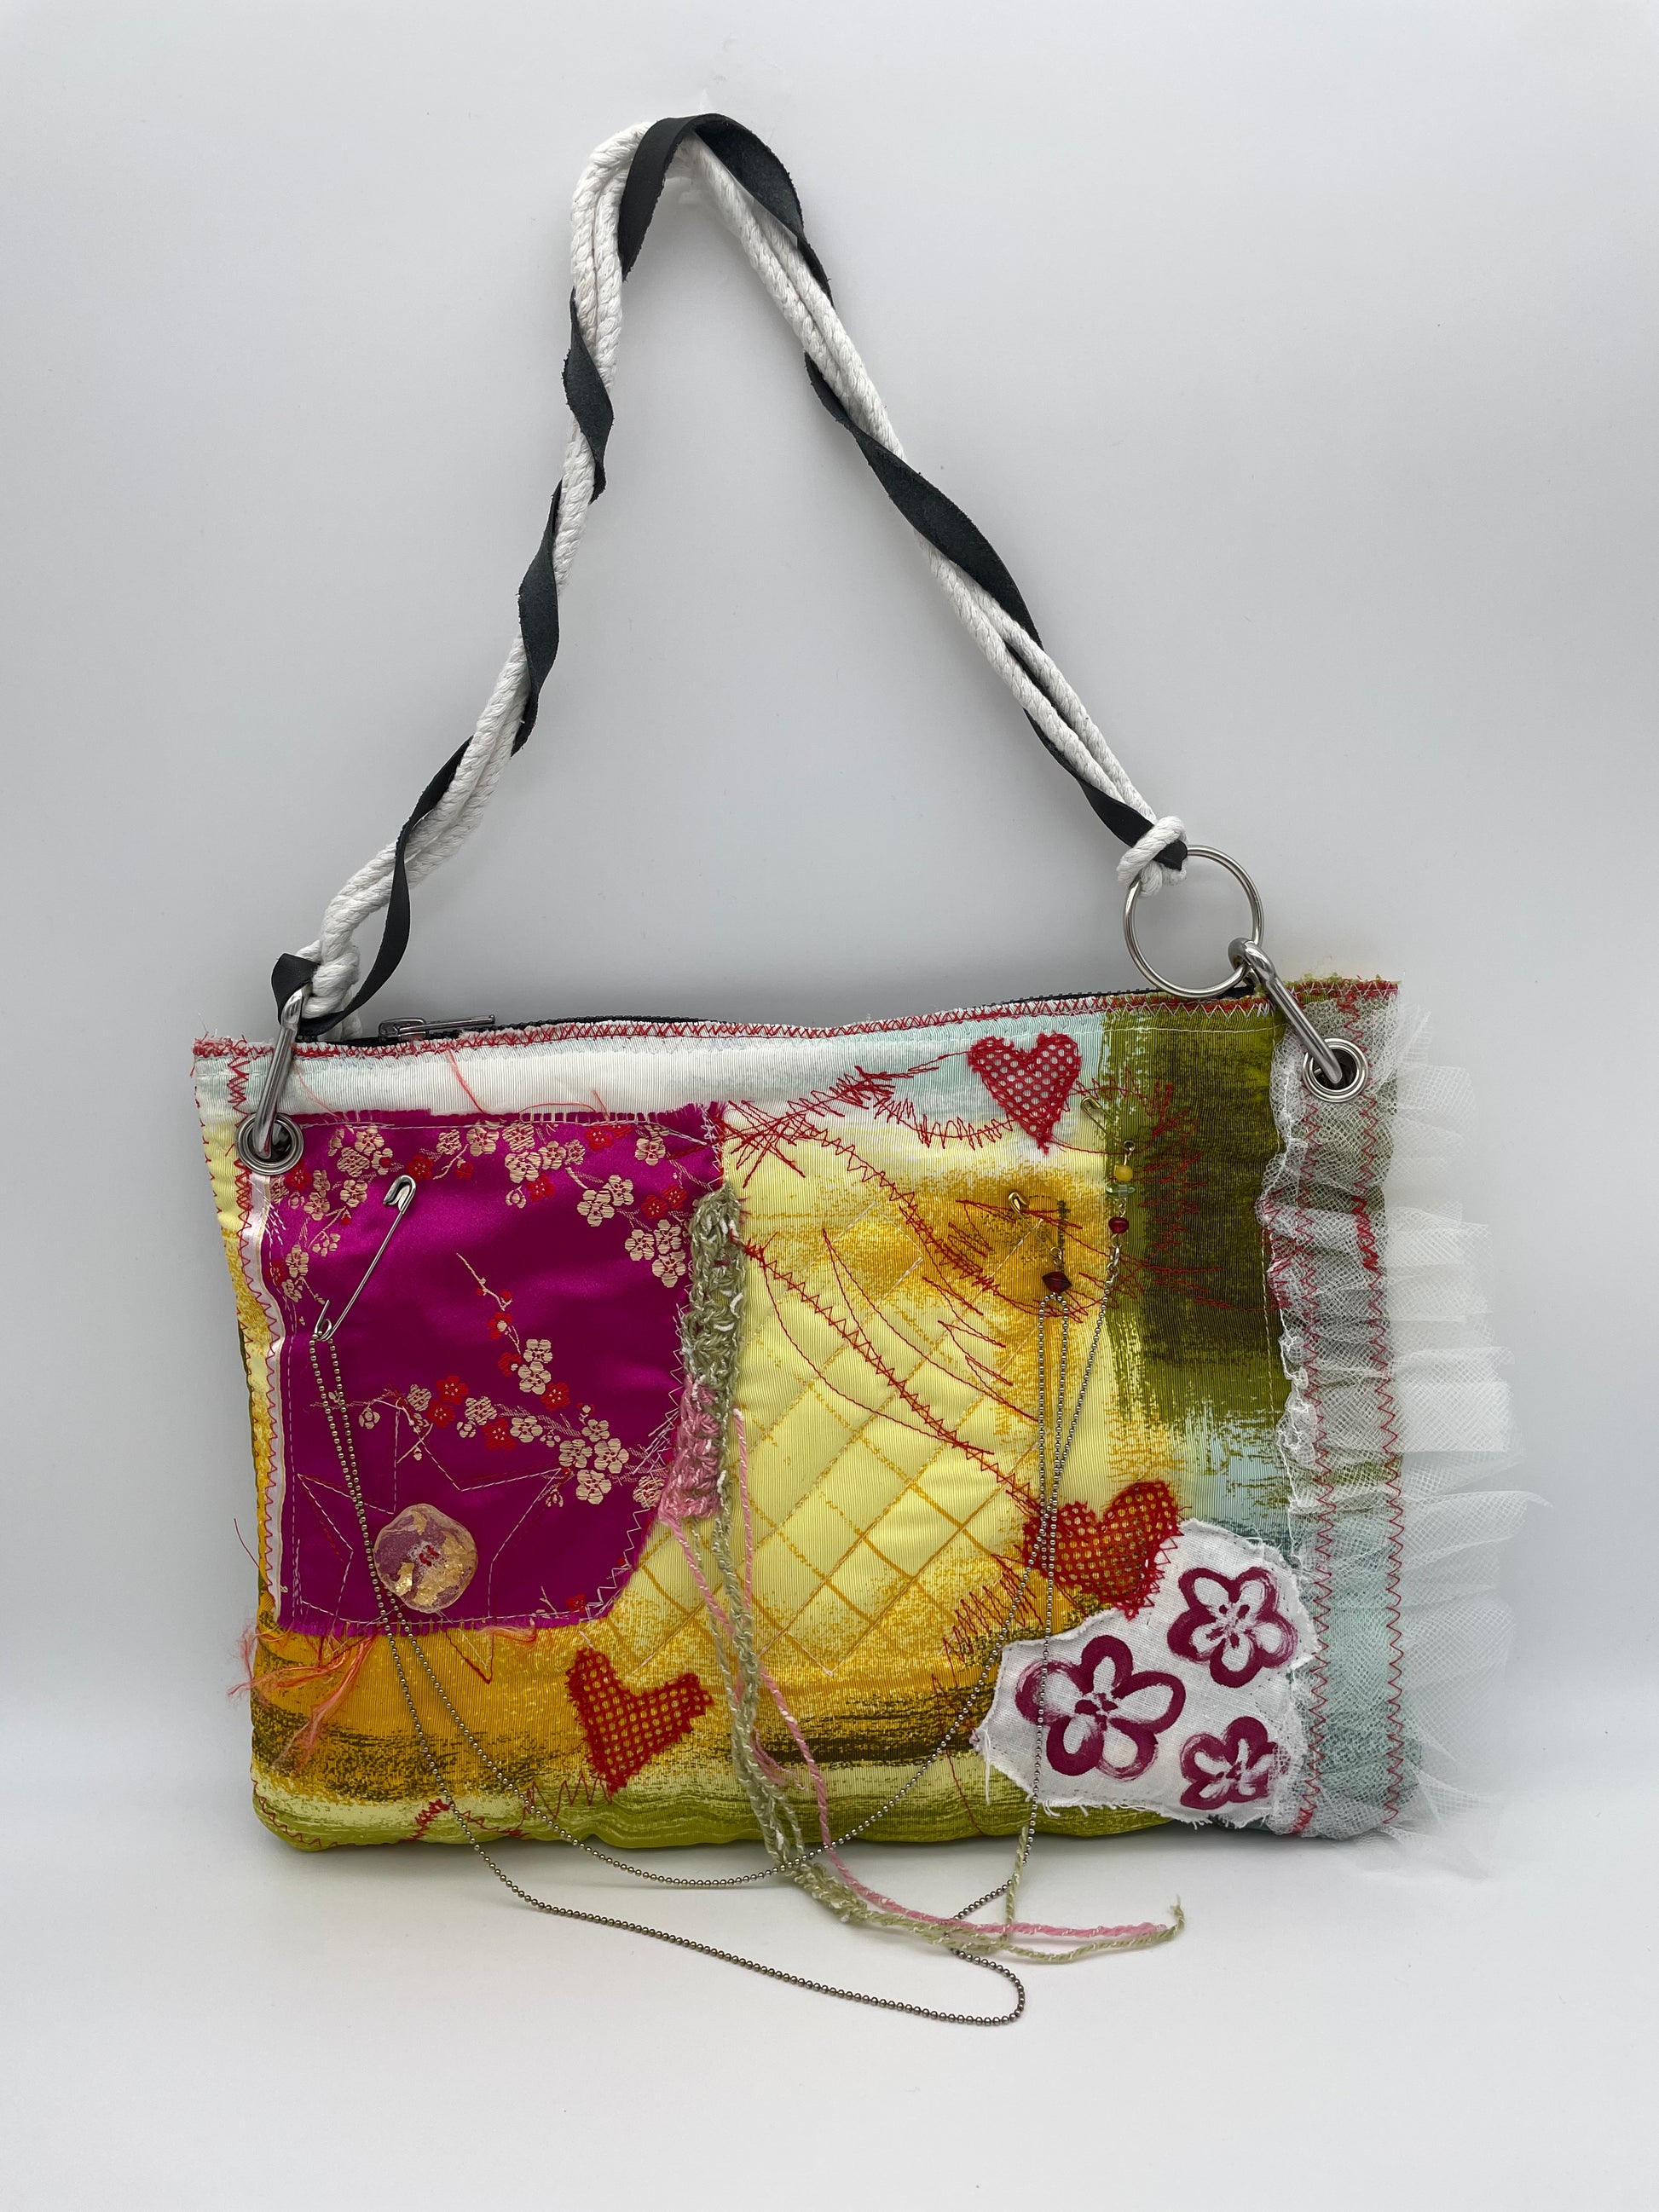 Upcycling bag pouch PARIS handmade fabric scraps bag reworked bag heart flowers